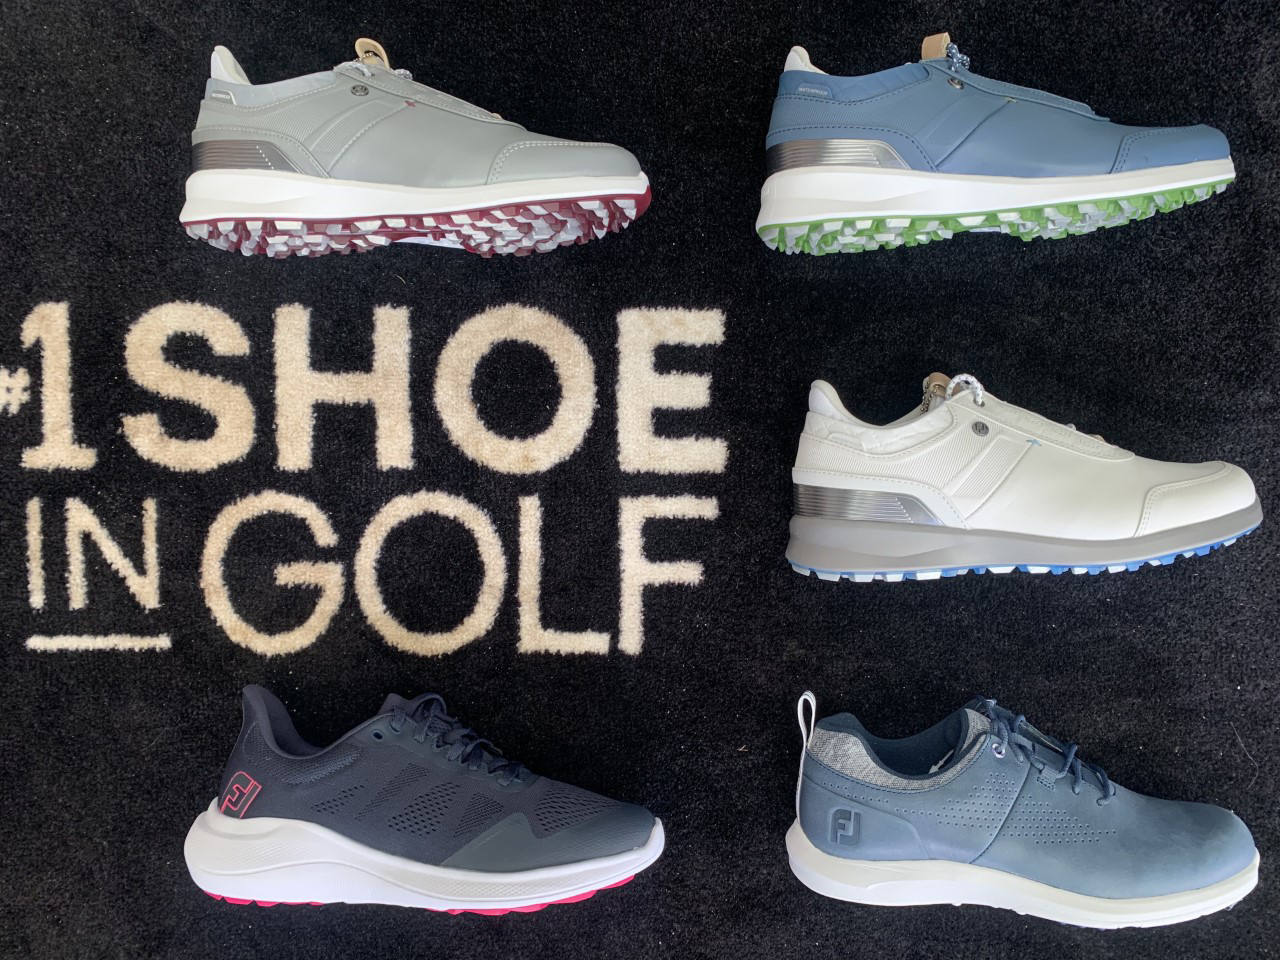 Bliv fittet de perfekte sko og prøv at låne en elvogn - Roskilde Golf Klub